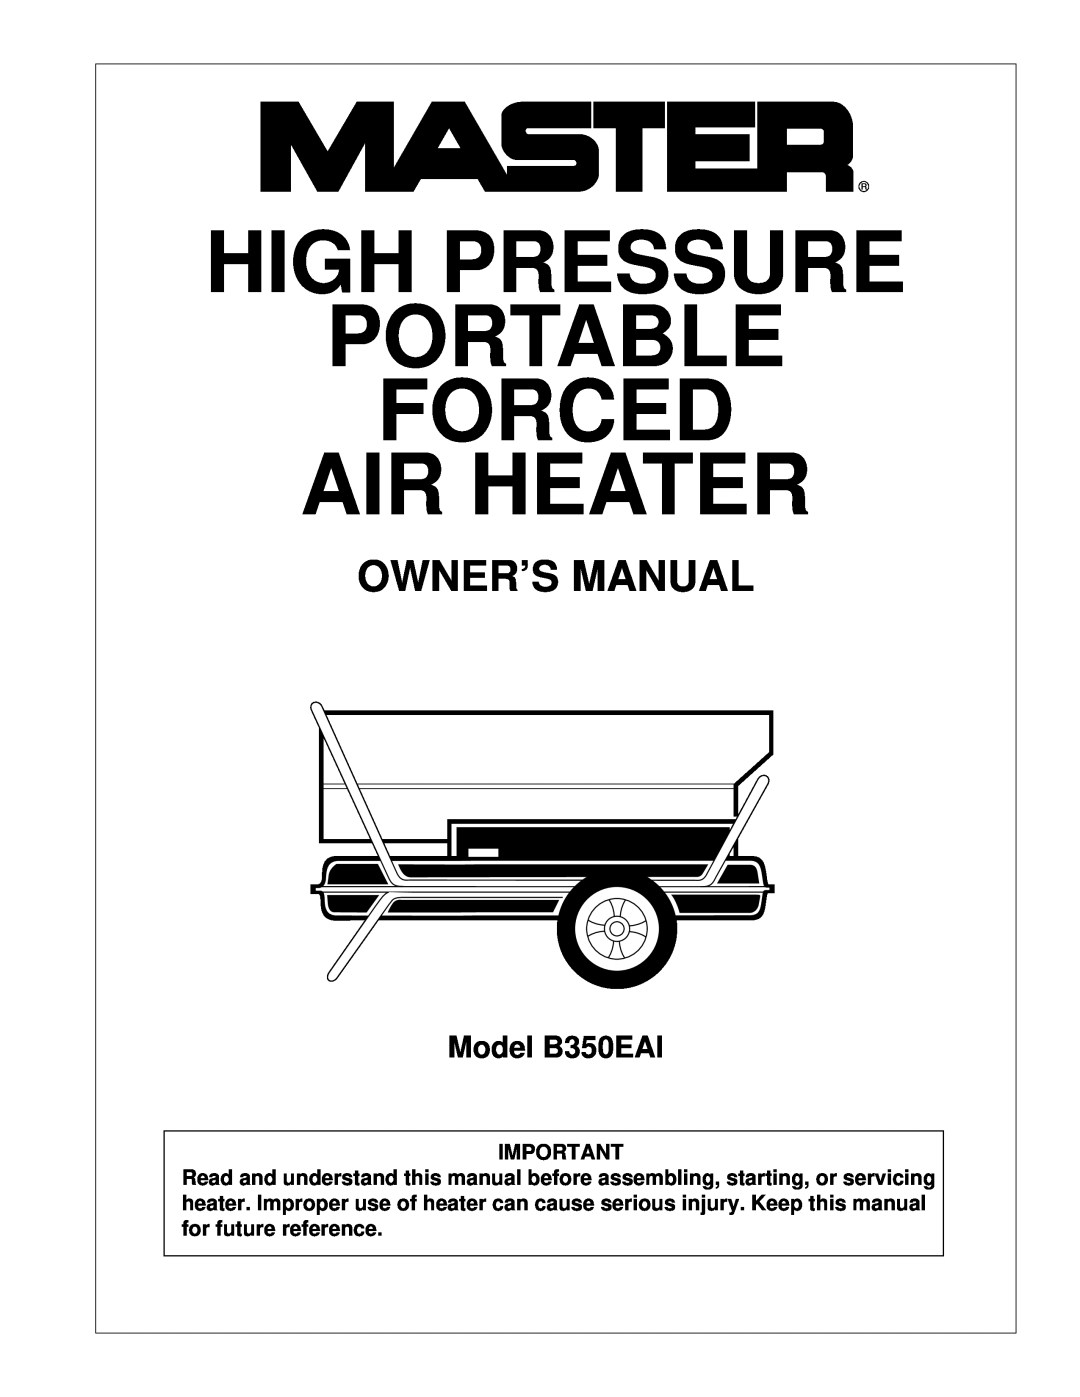 Master Lock owner manual Model B350EAI, High Pressure Portable Forced Air Heater, Side Pfa/Pv 